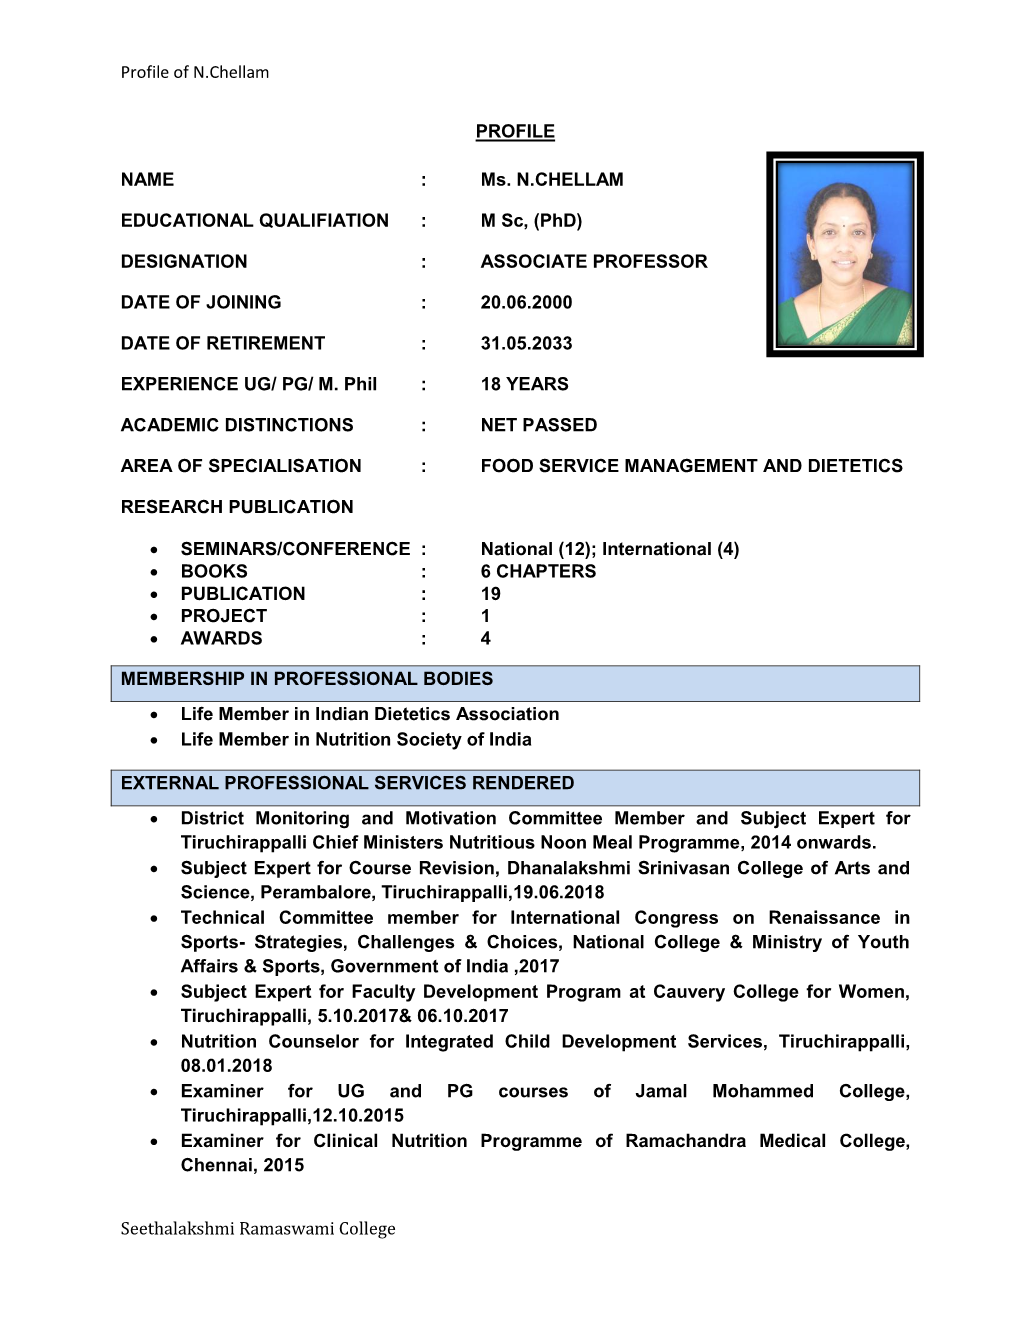 Profile of N.Chellam Seethalakshmi Ramaswami College PROFILE NAME